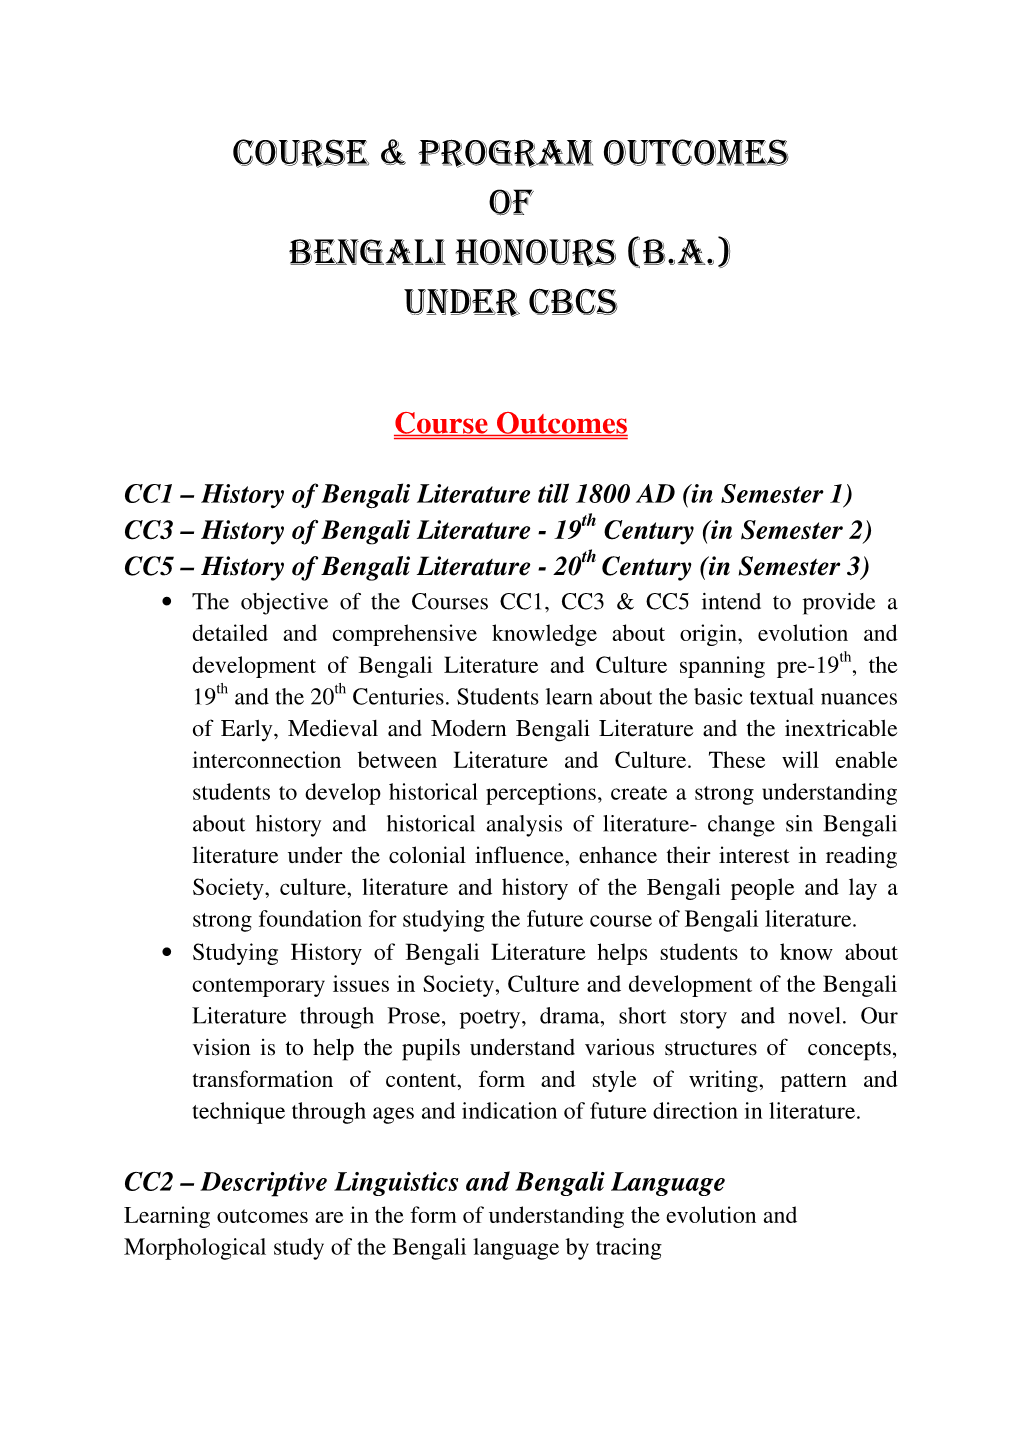 Course & Program Outcomes of Bengali Honours (B.A